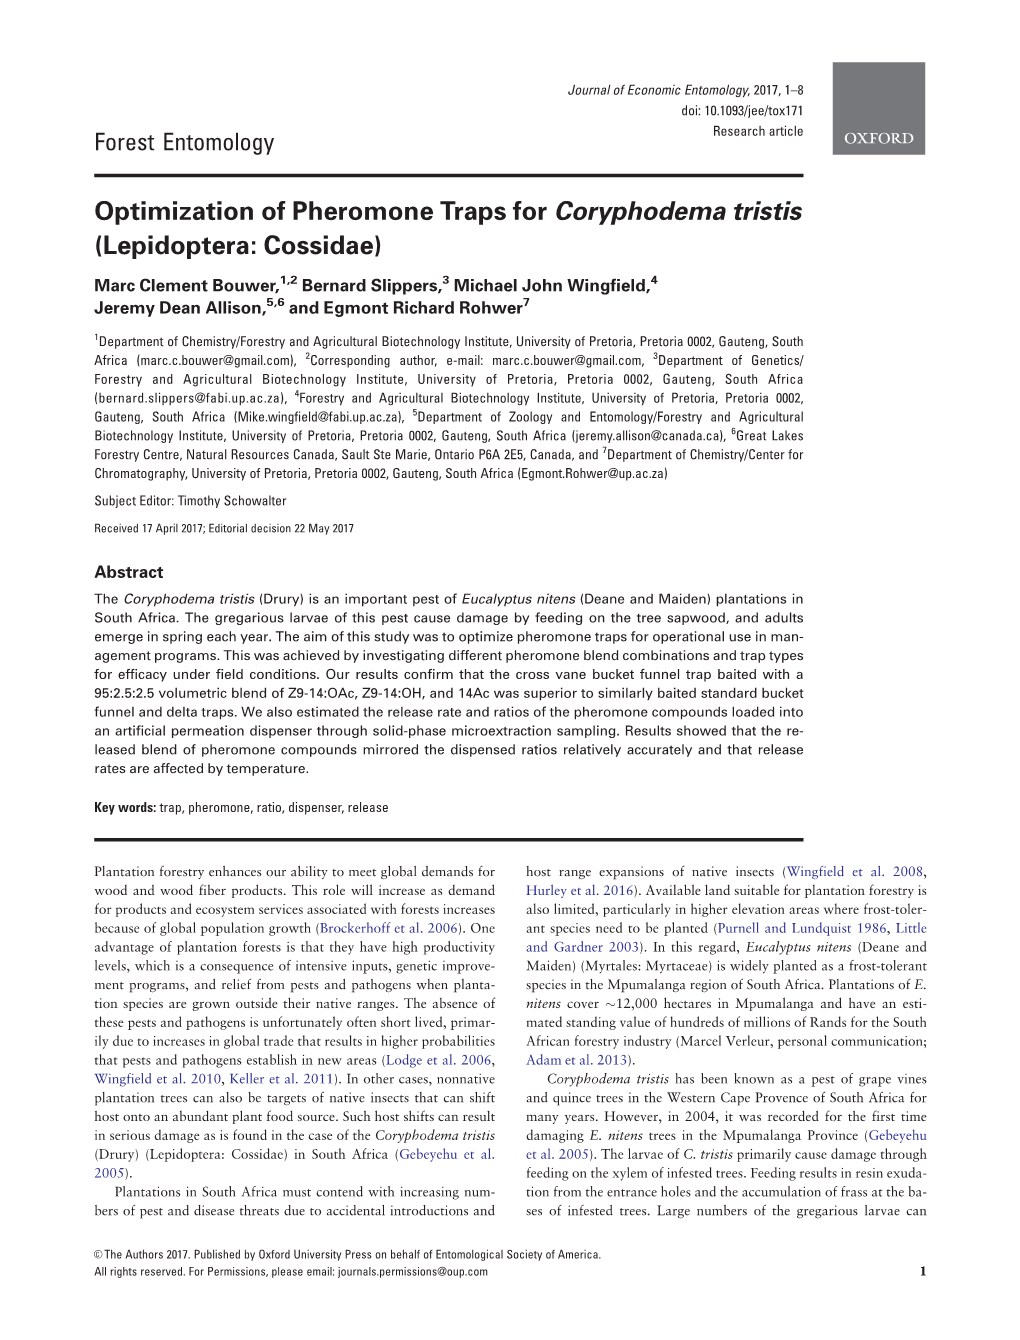 Optimization of Pheromone Traps for Coryphodema Tristis (Lepidoptera: Cossidae)